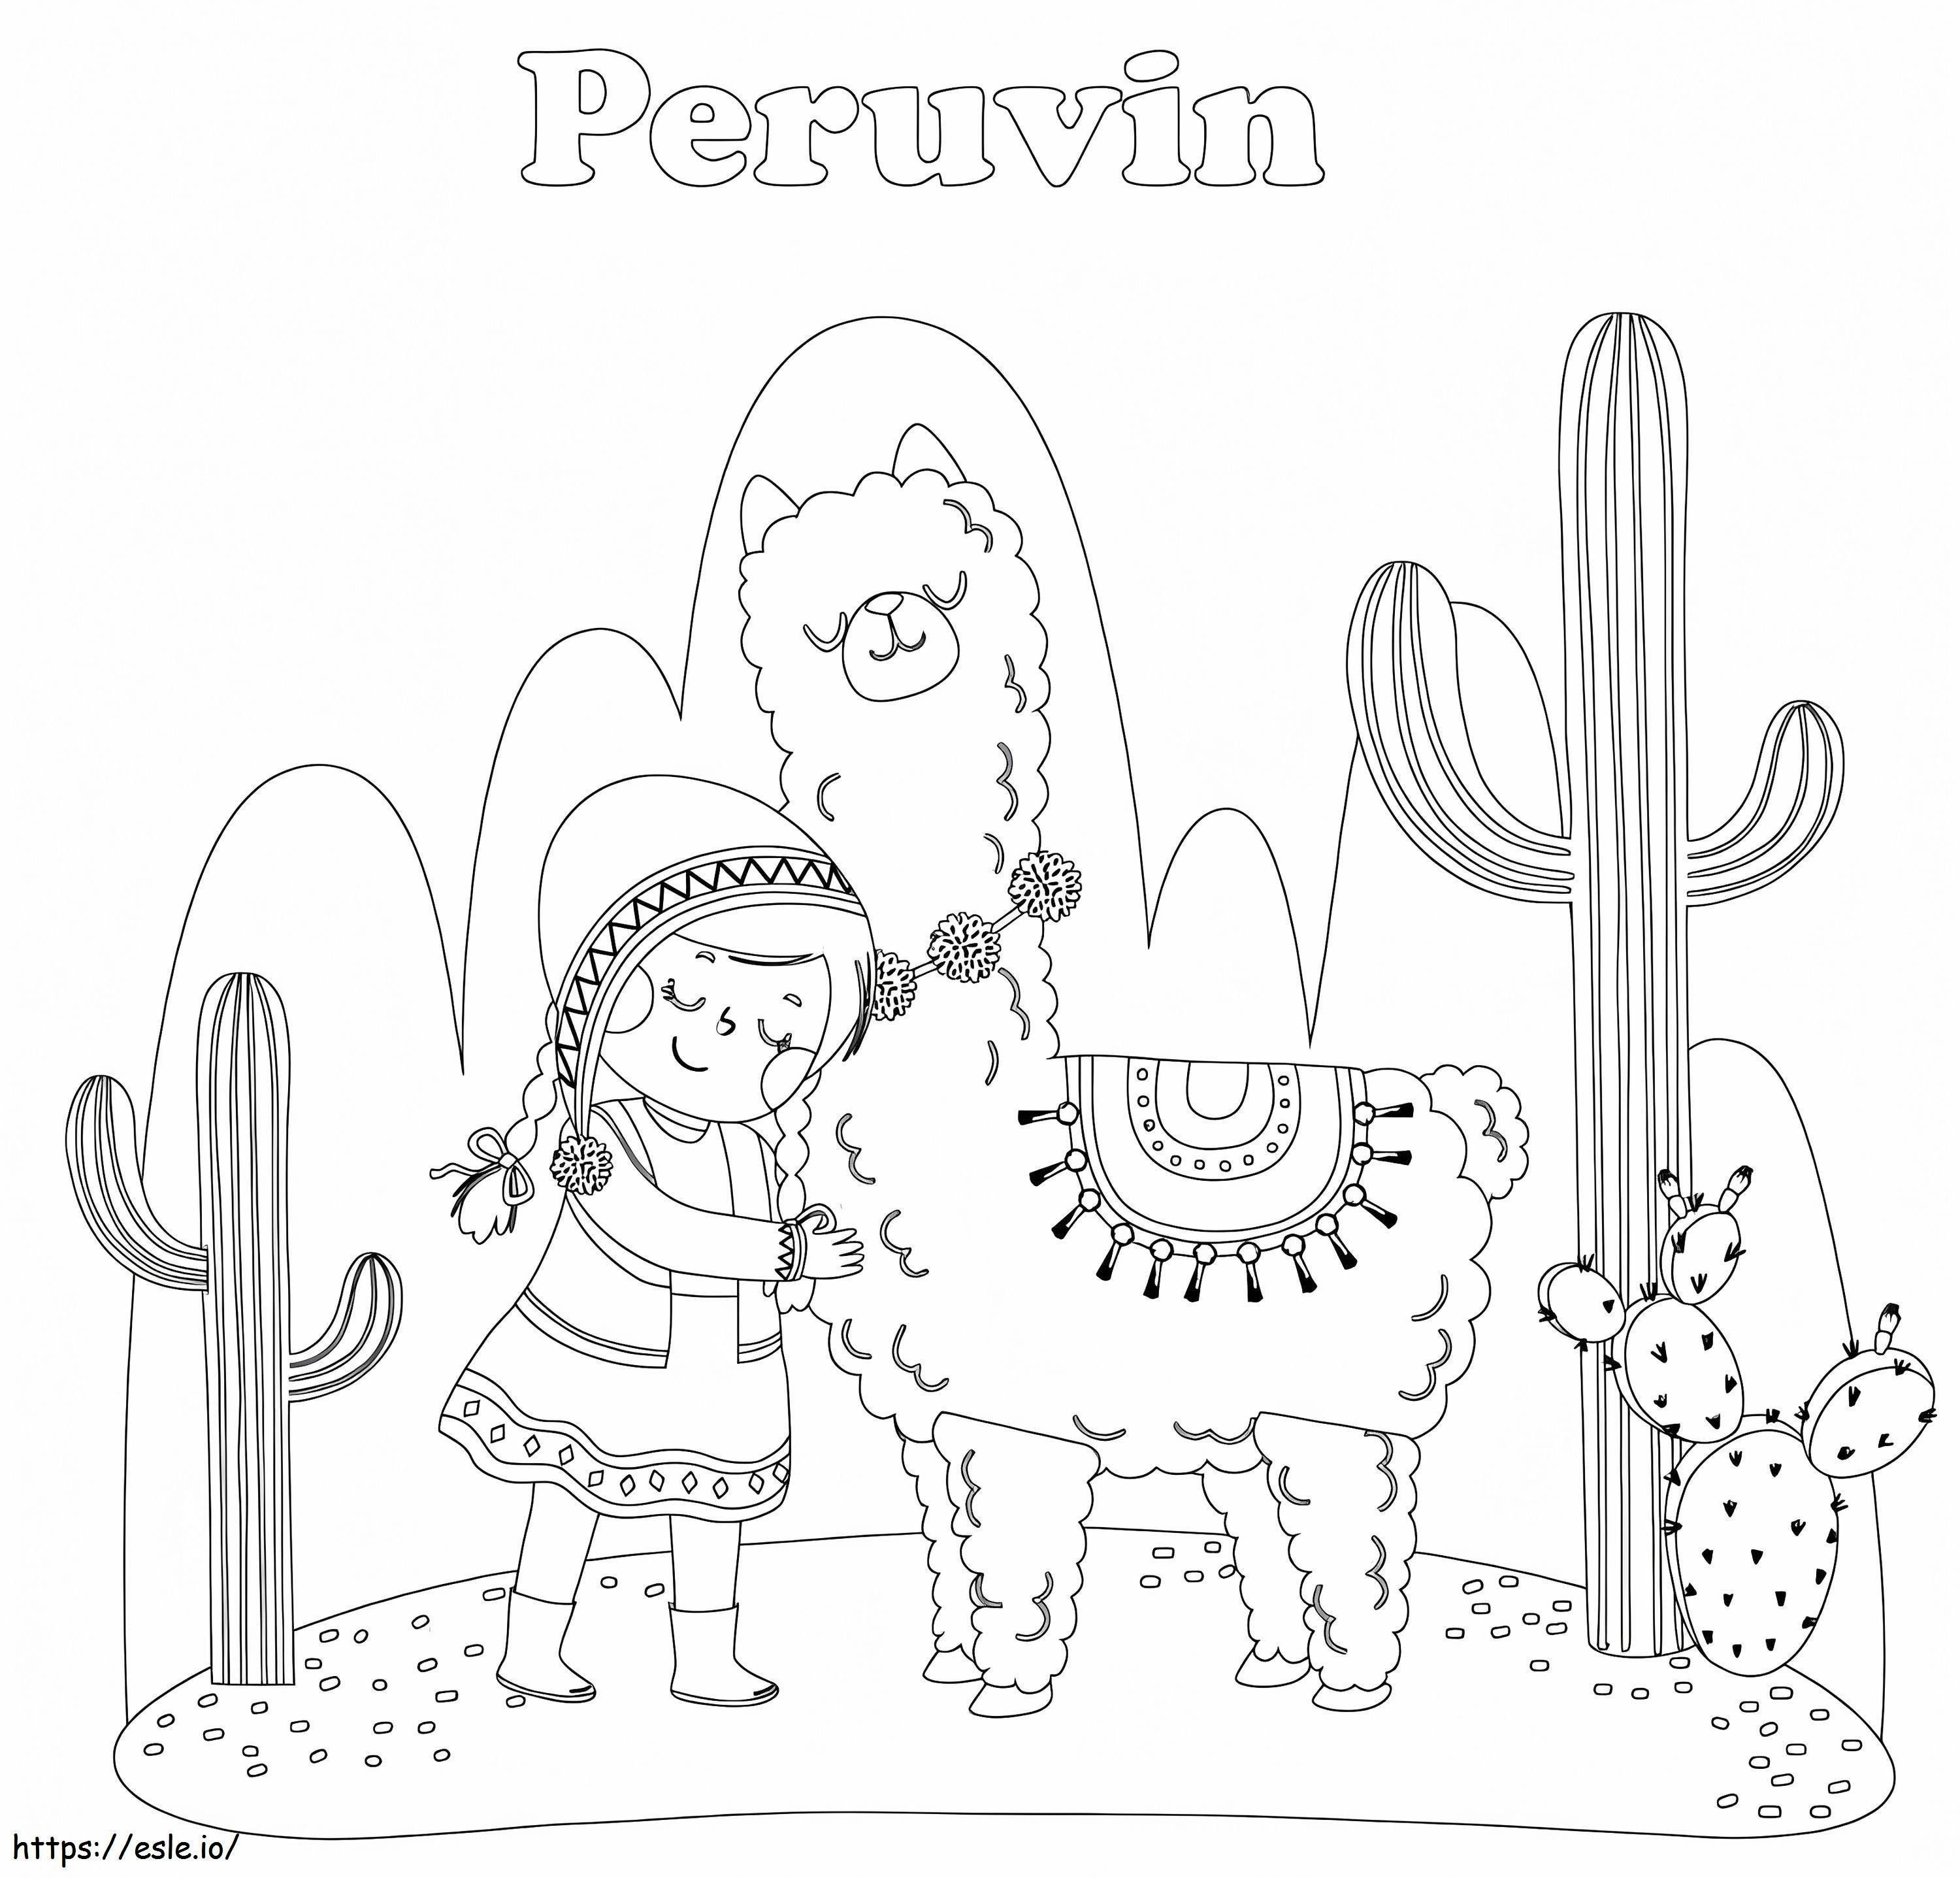 Peruwin kolorowanka